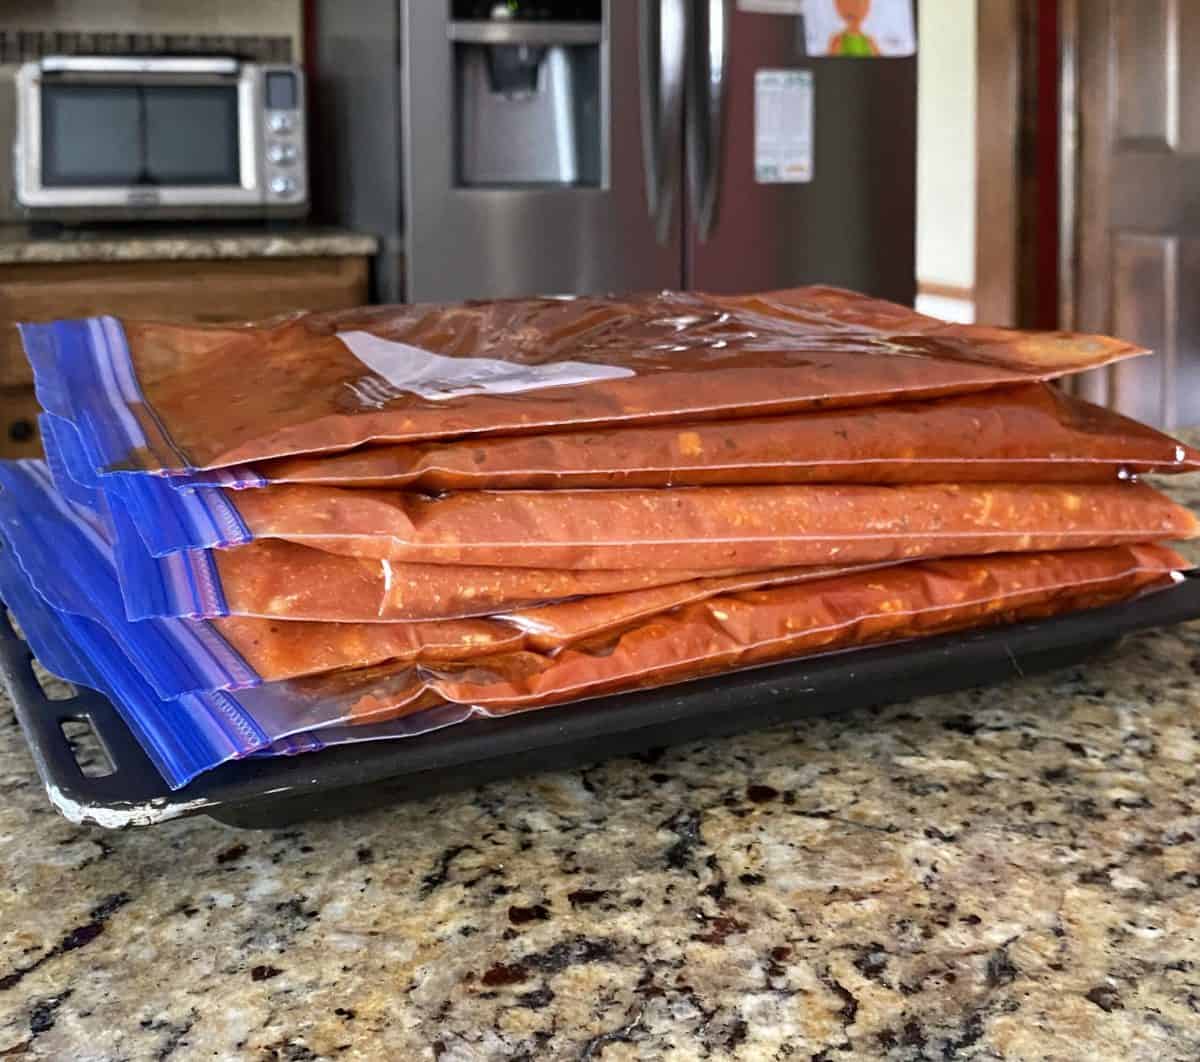 pasta sauce in freezer bags